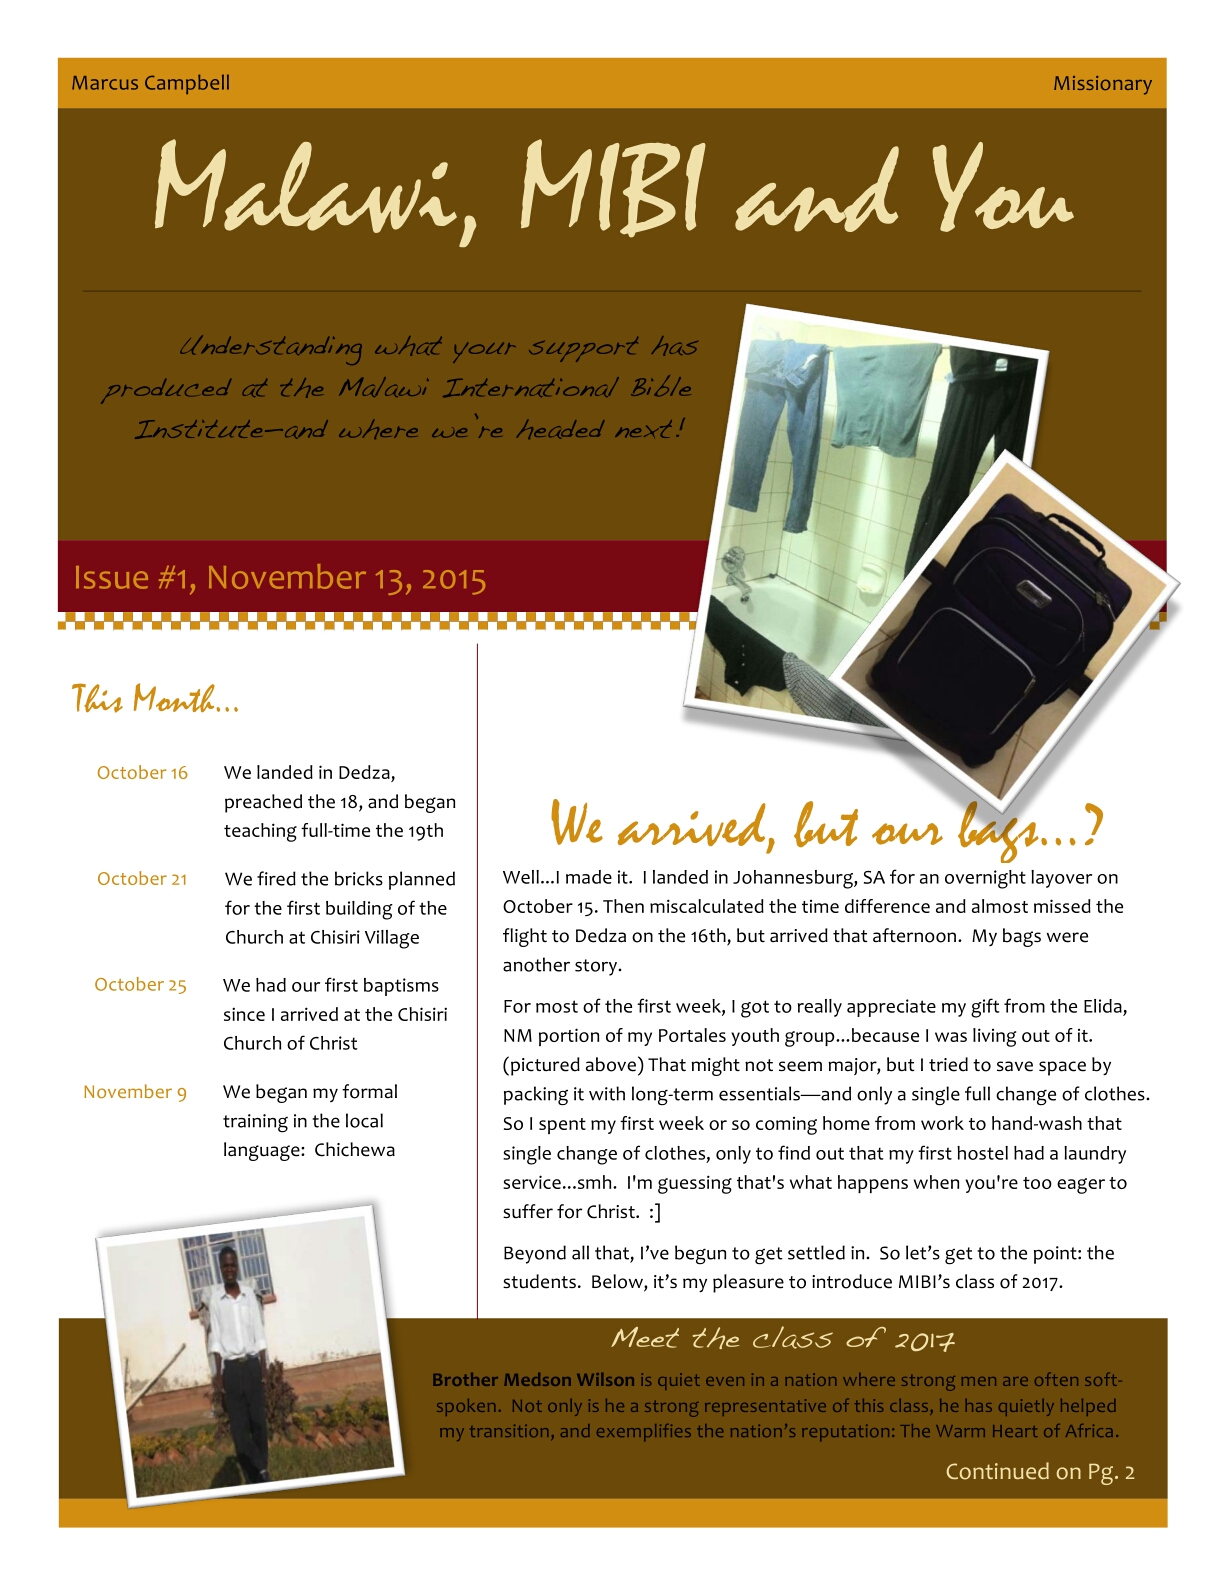 mission-malawi-newsletter-issue-1-nov-13-2015 [1]